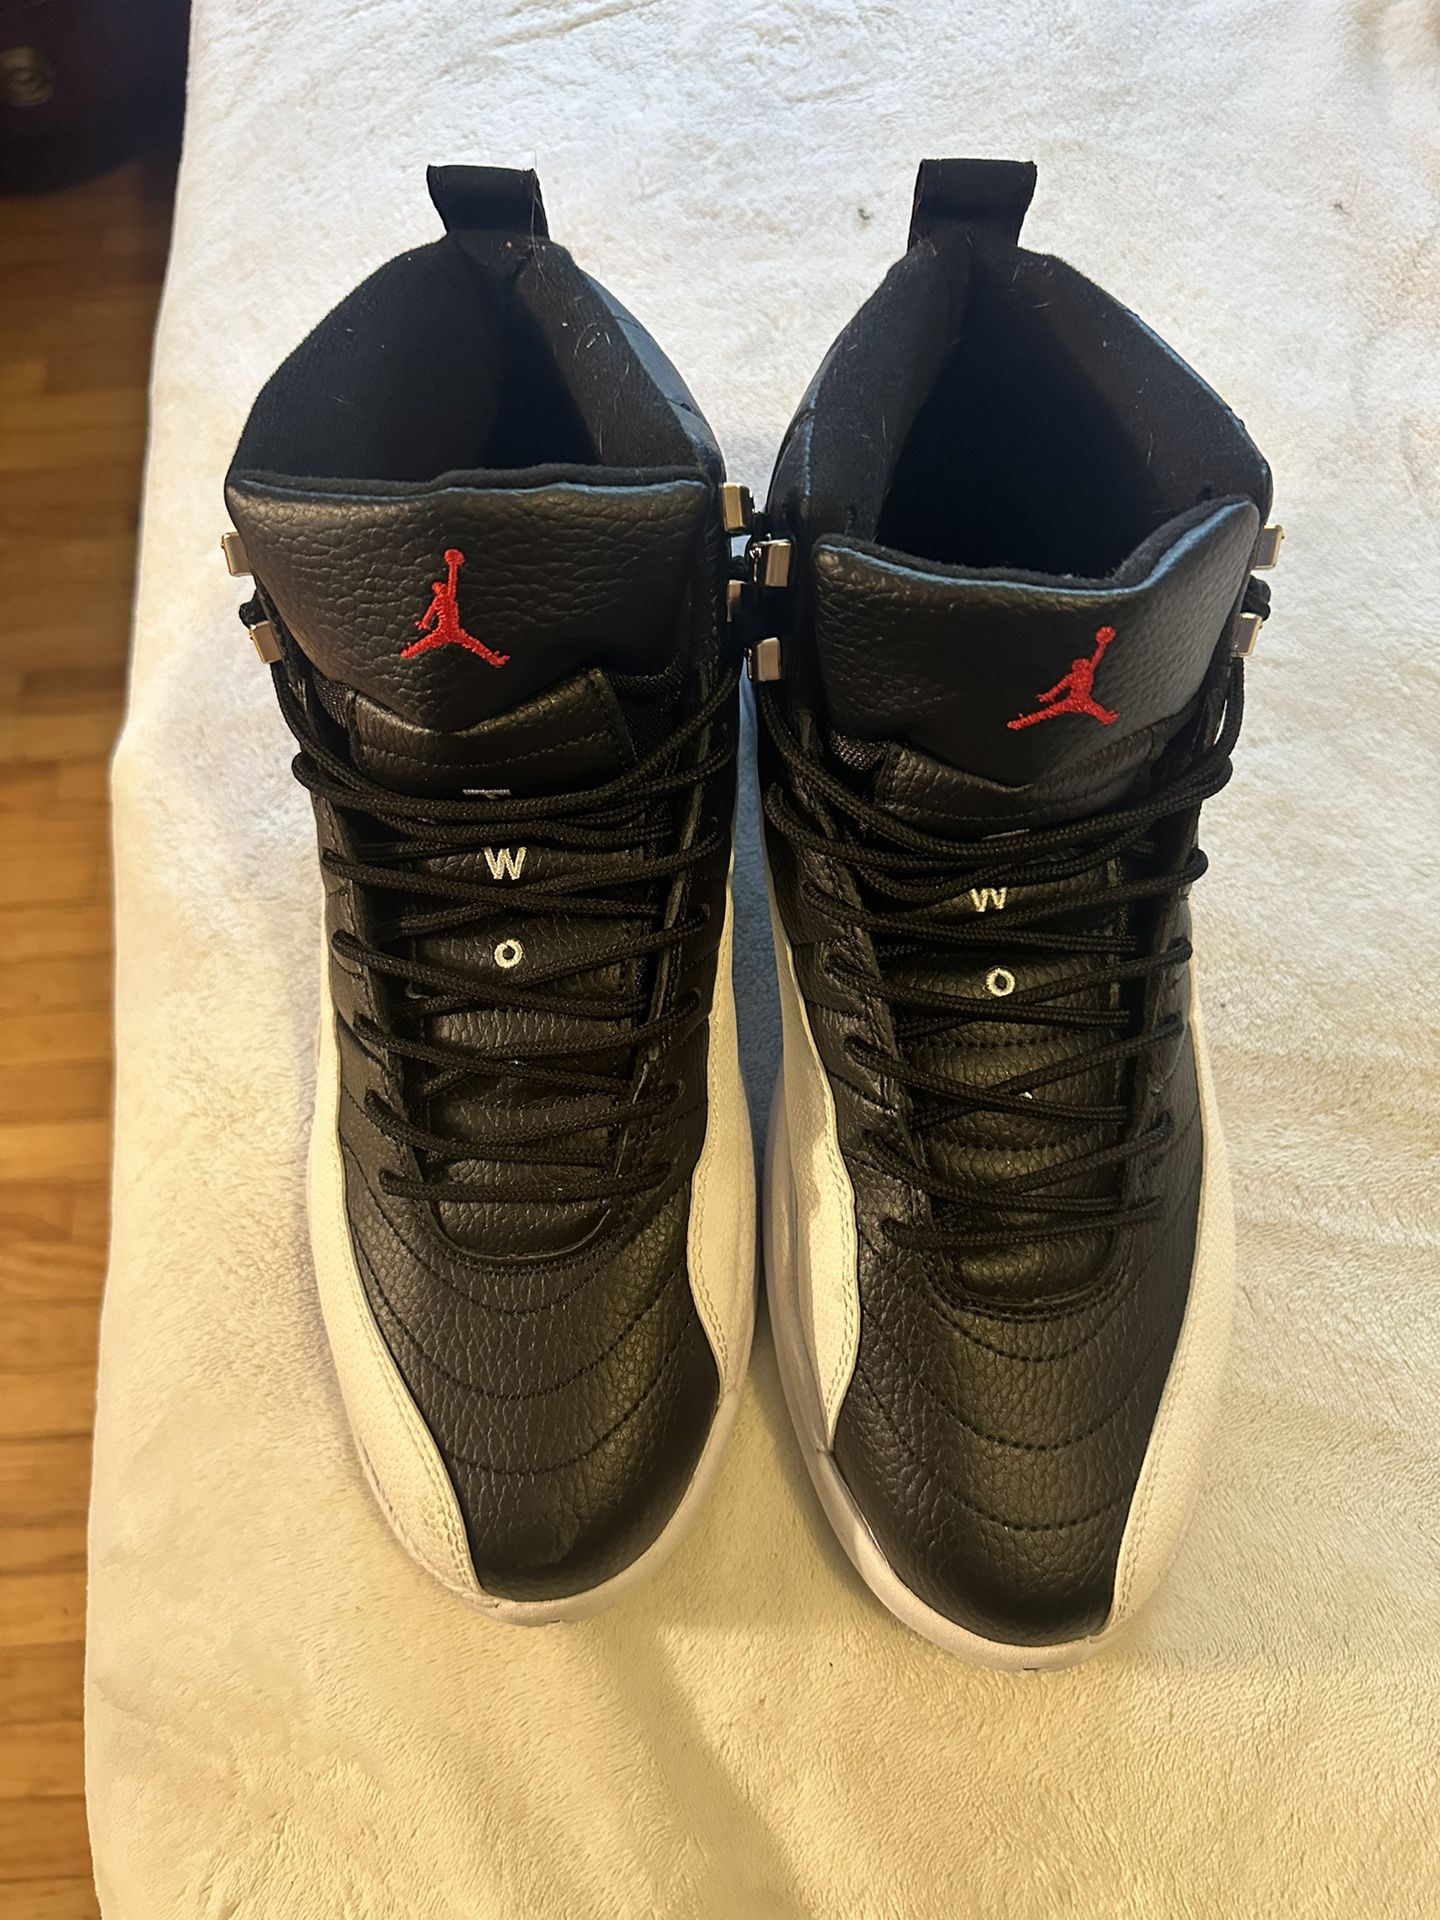 Size 13 Black and White Jordan 12’s 